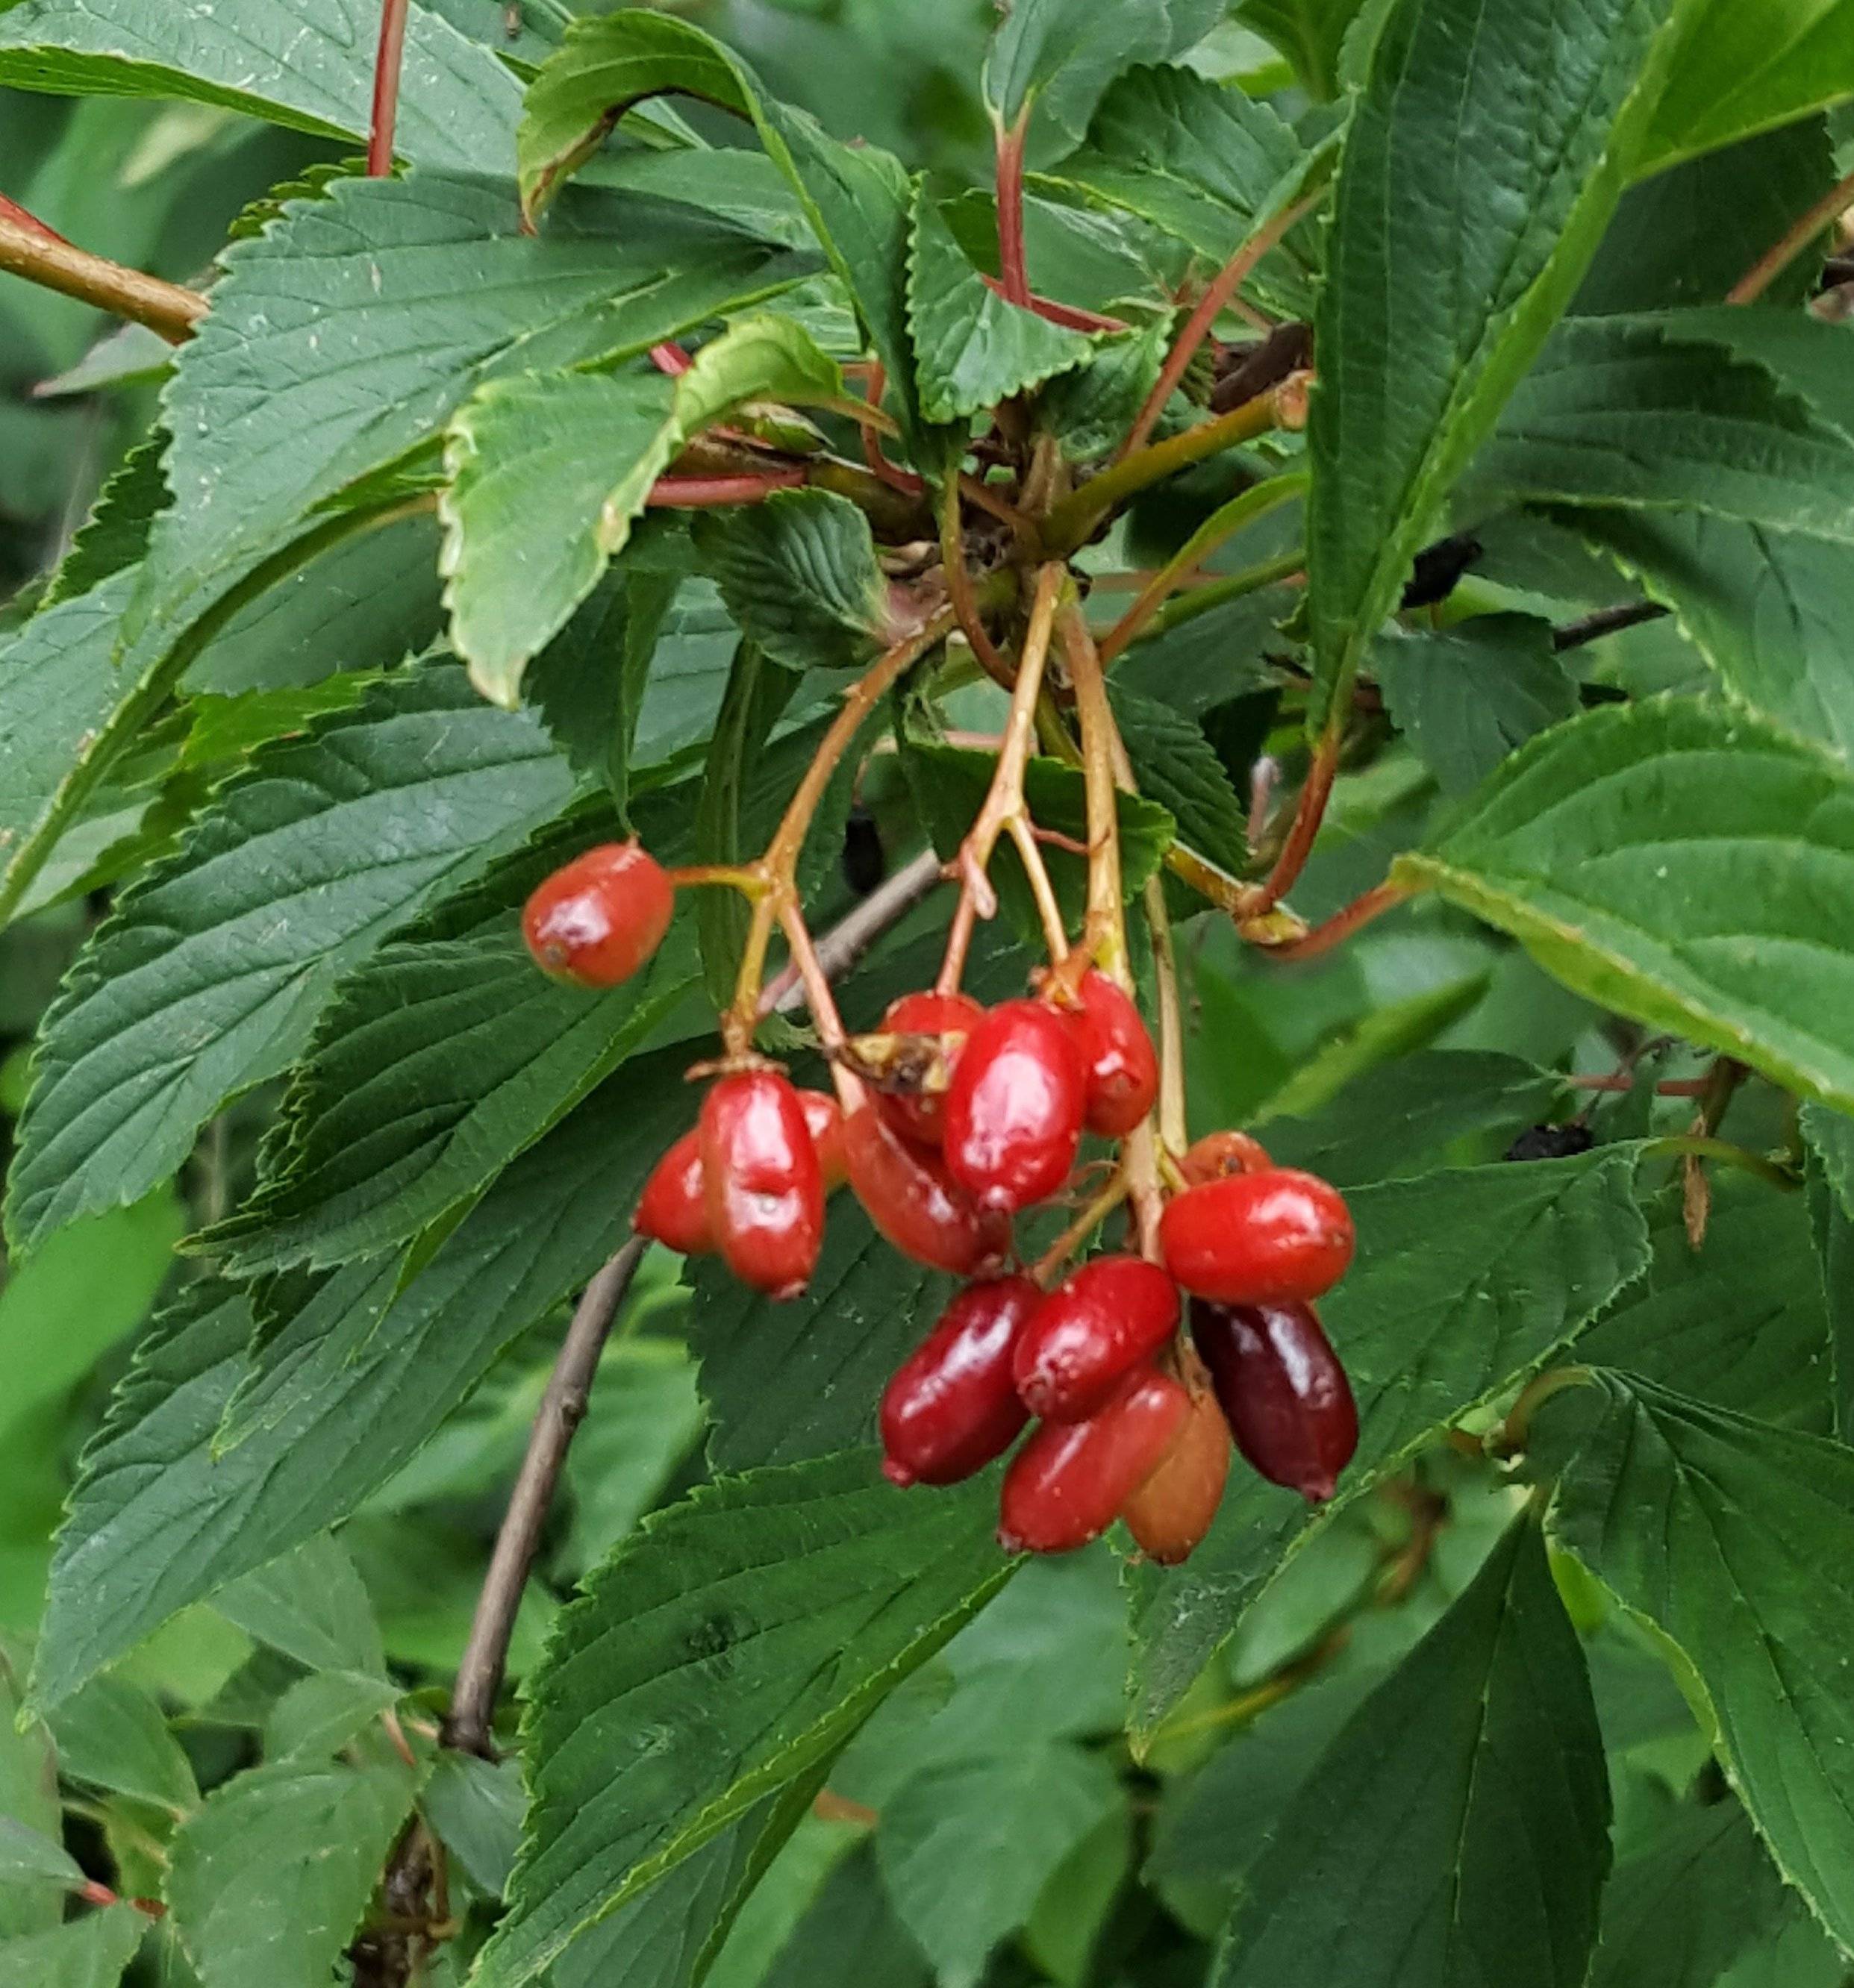 identification - Identify shrub with red berries in UK - Gardening ...